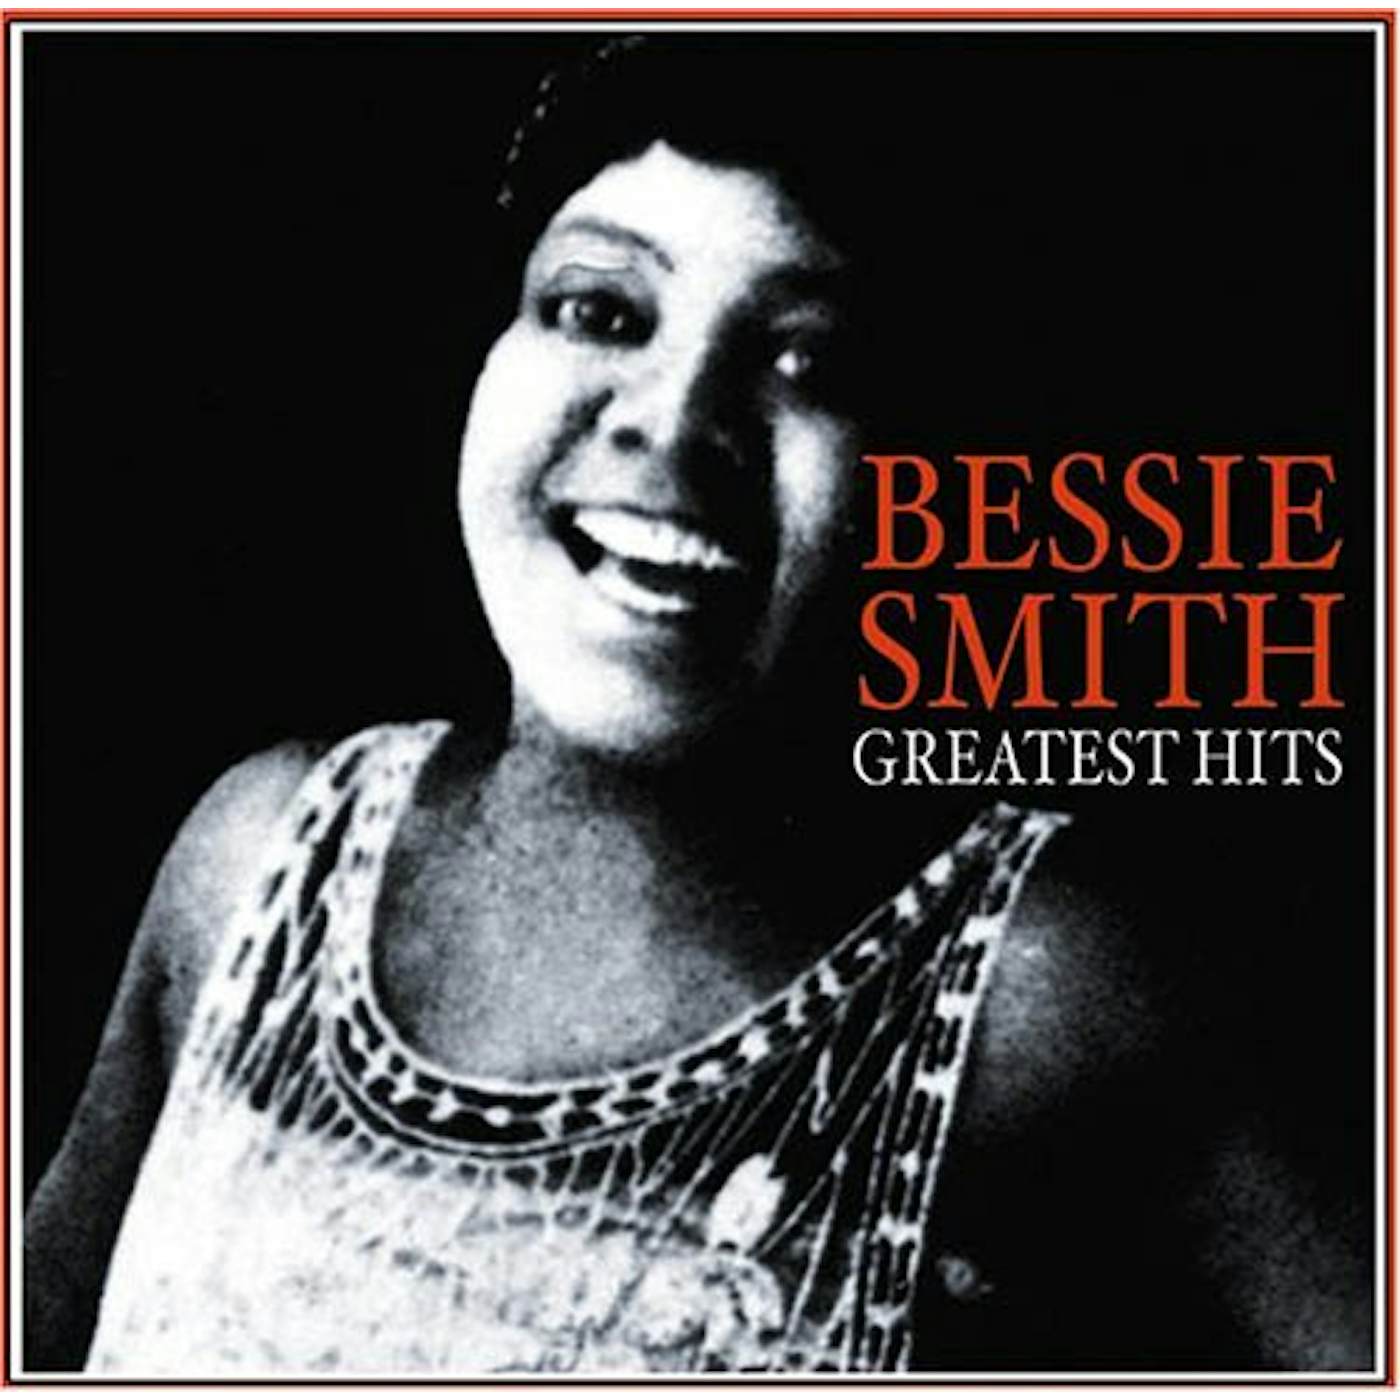 Bessie Smith GREATEST HITS CD